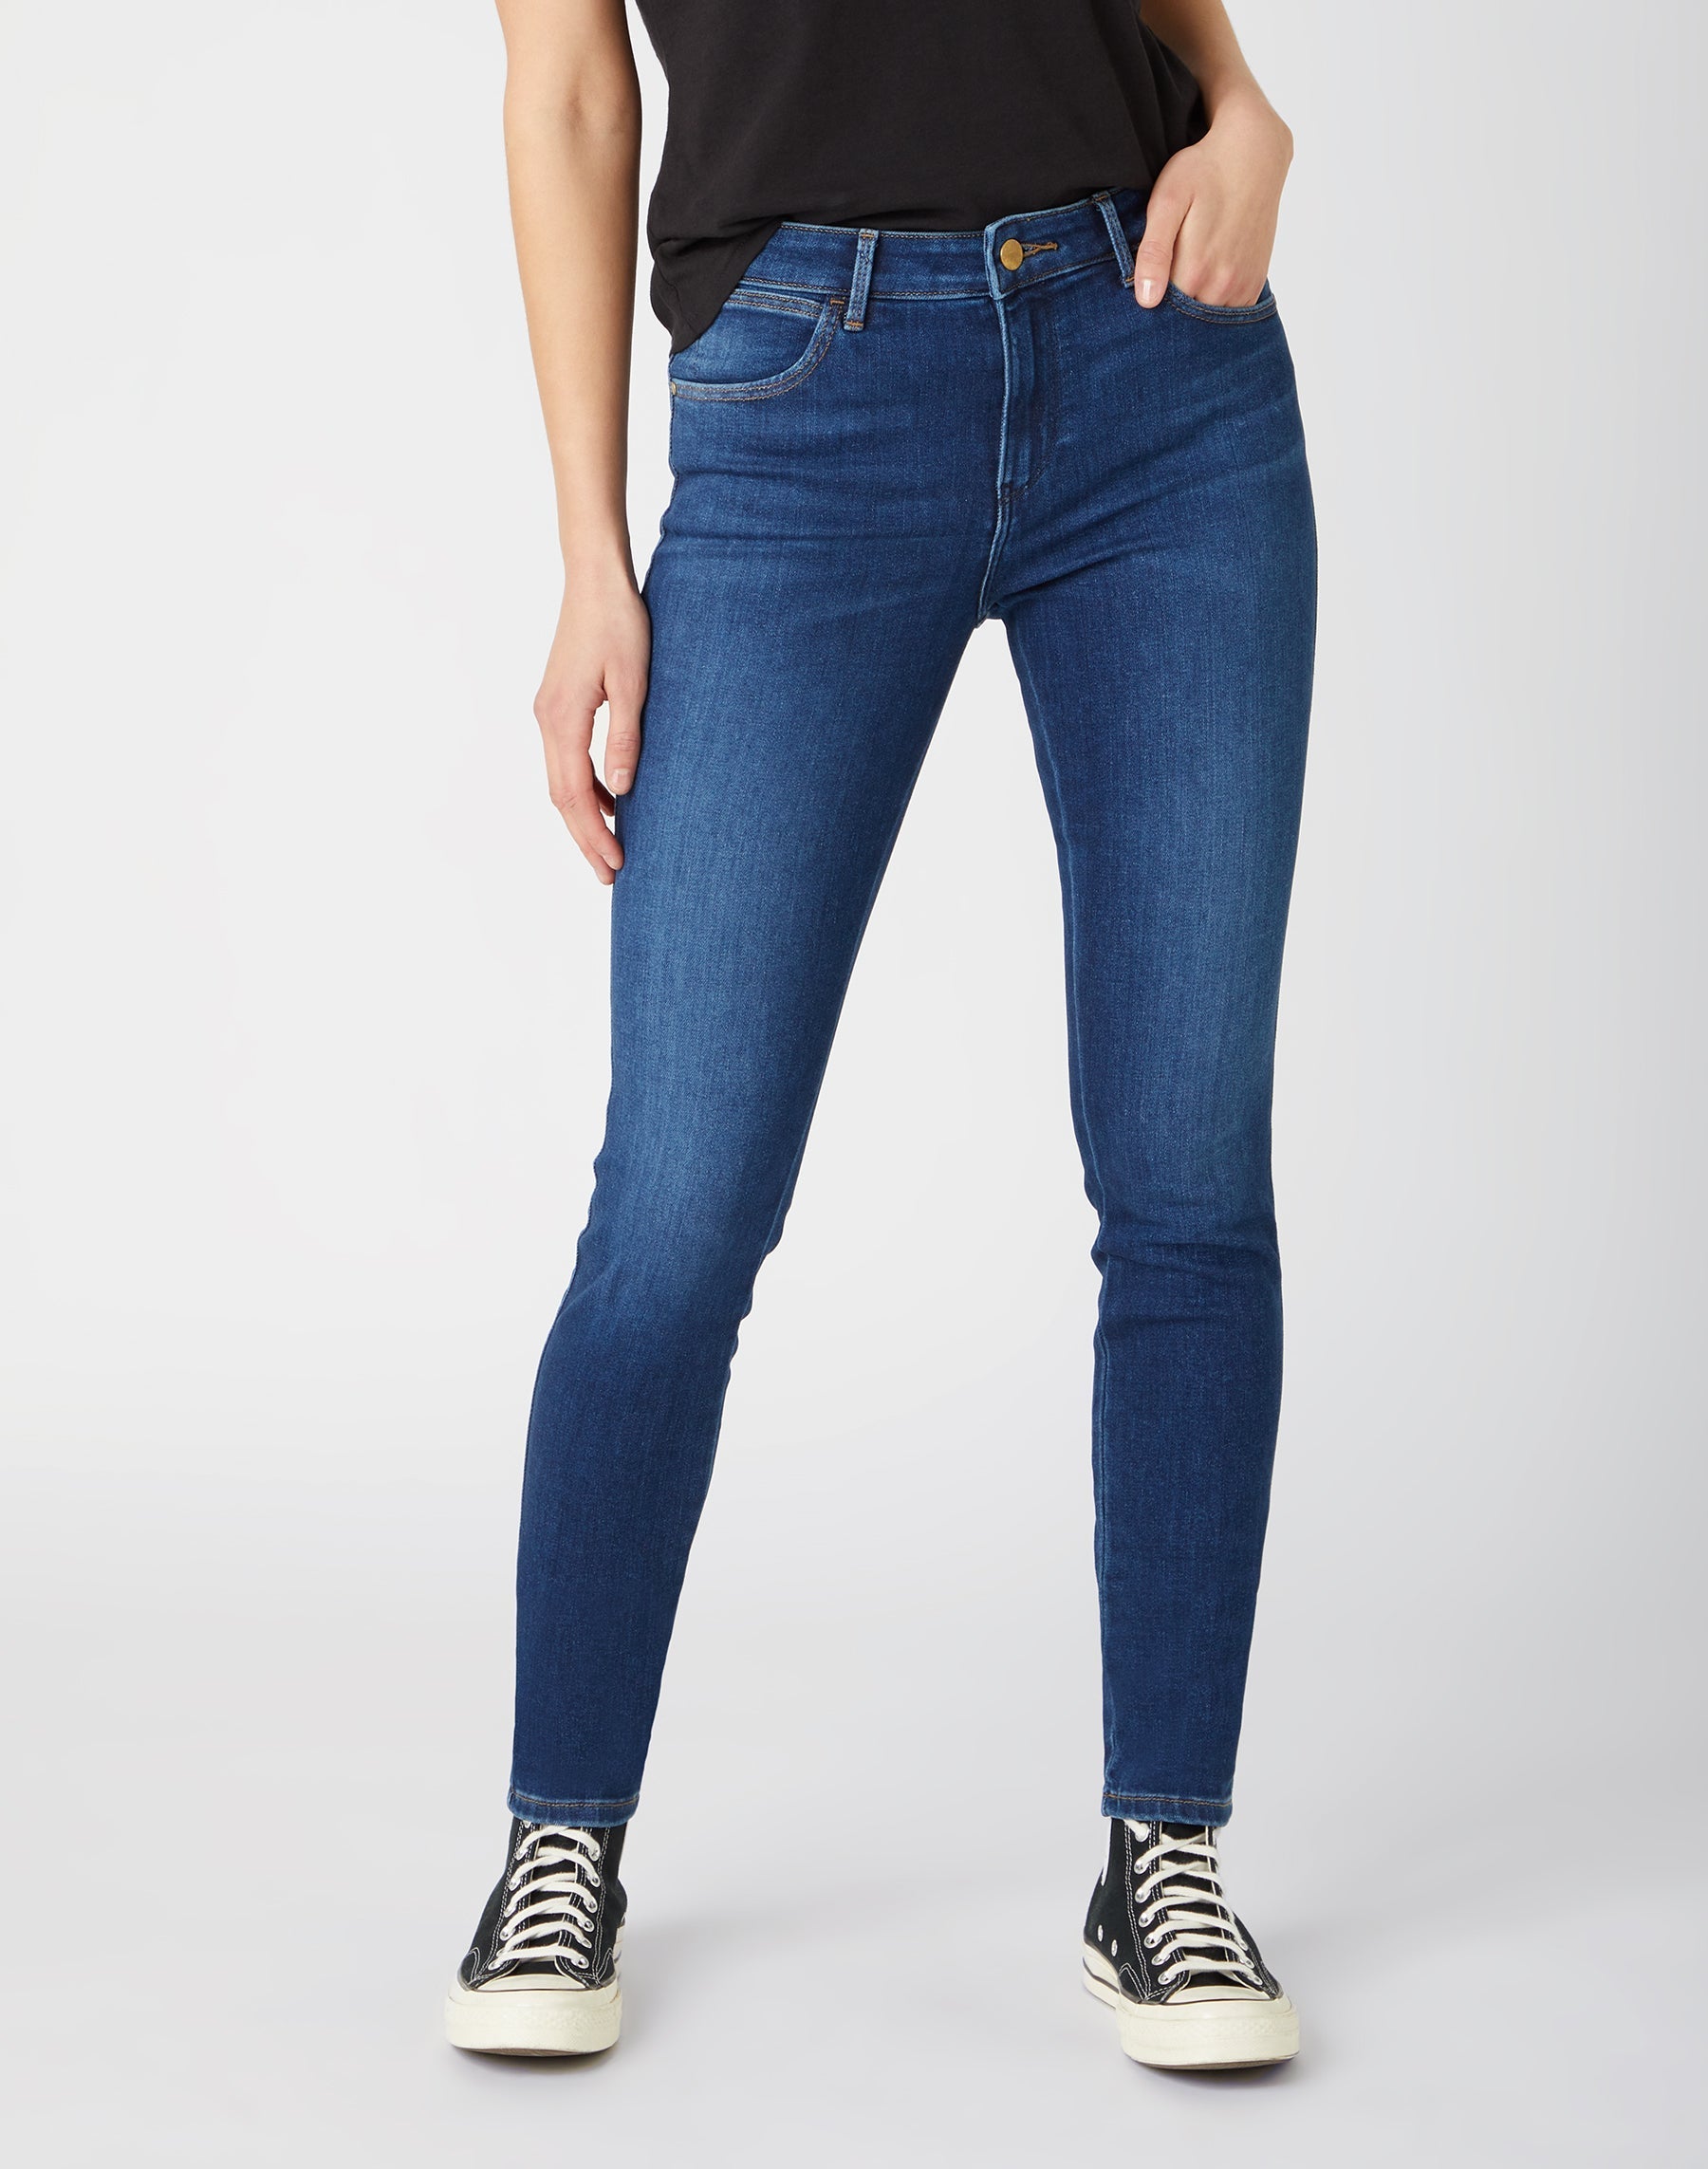 Skinny Jeans in Authentic Love | WRANGLER Official Store Switzerland -  WRANGLER Schweiz